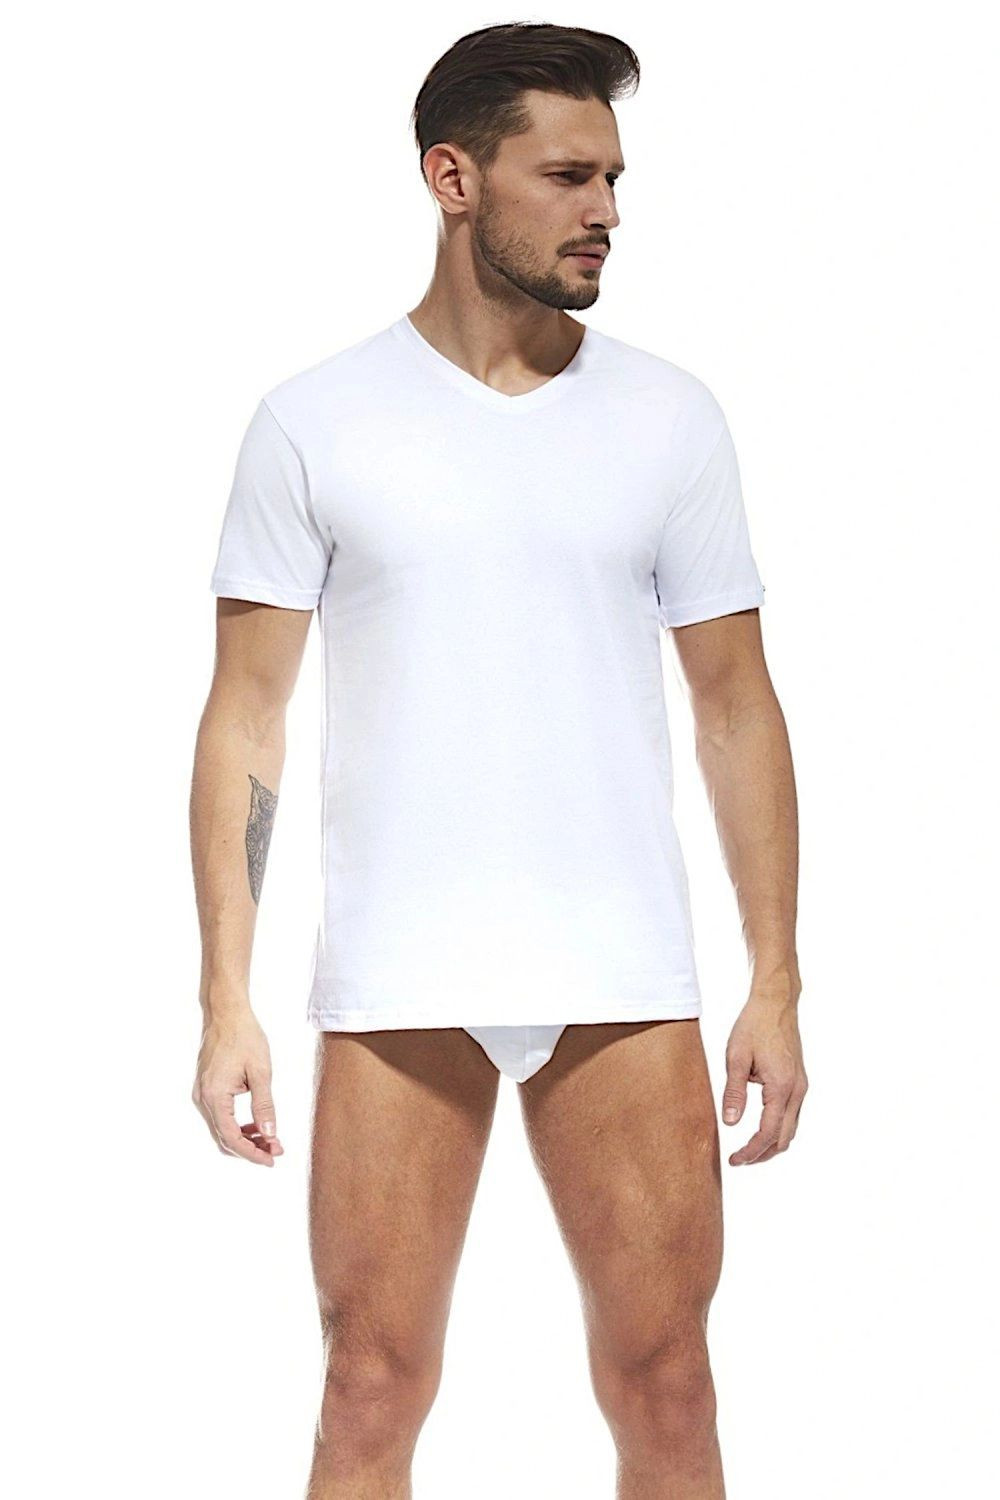 Pánské tričko 201 Authentic new biała - CORNETTE Bílá XL